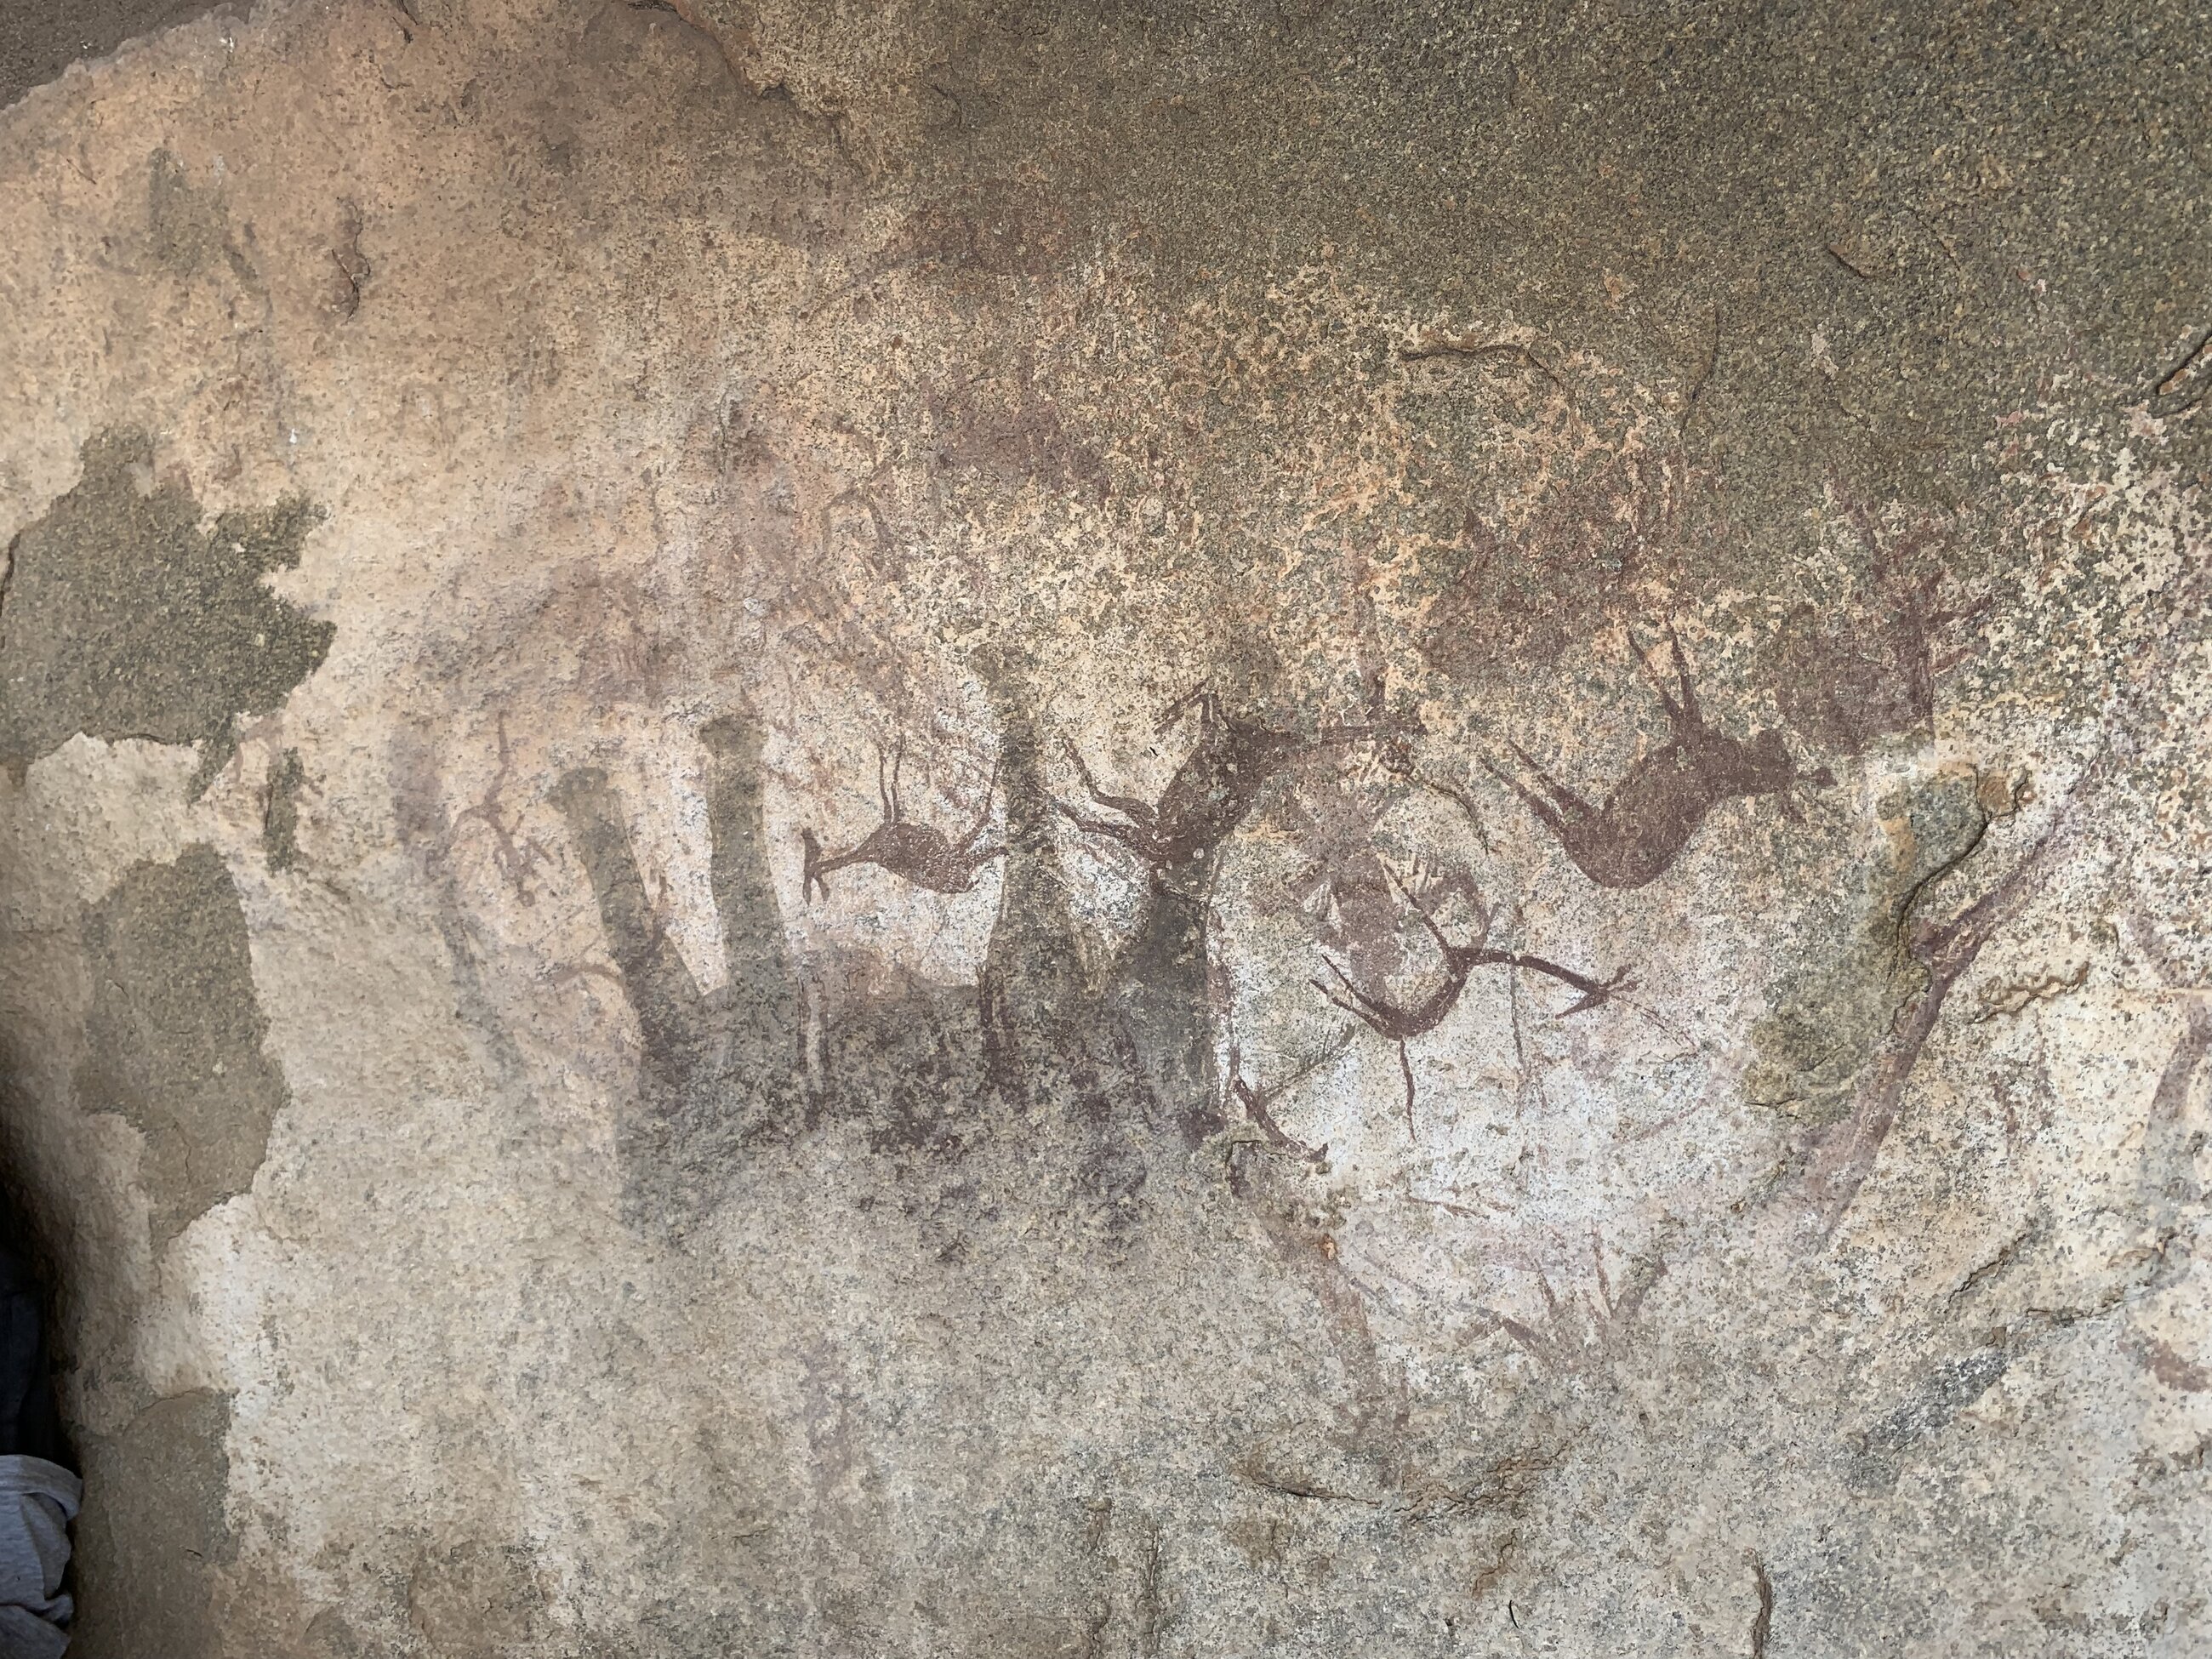 Incredible cave paintings